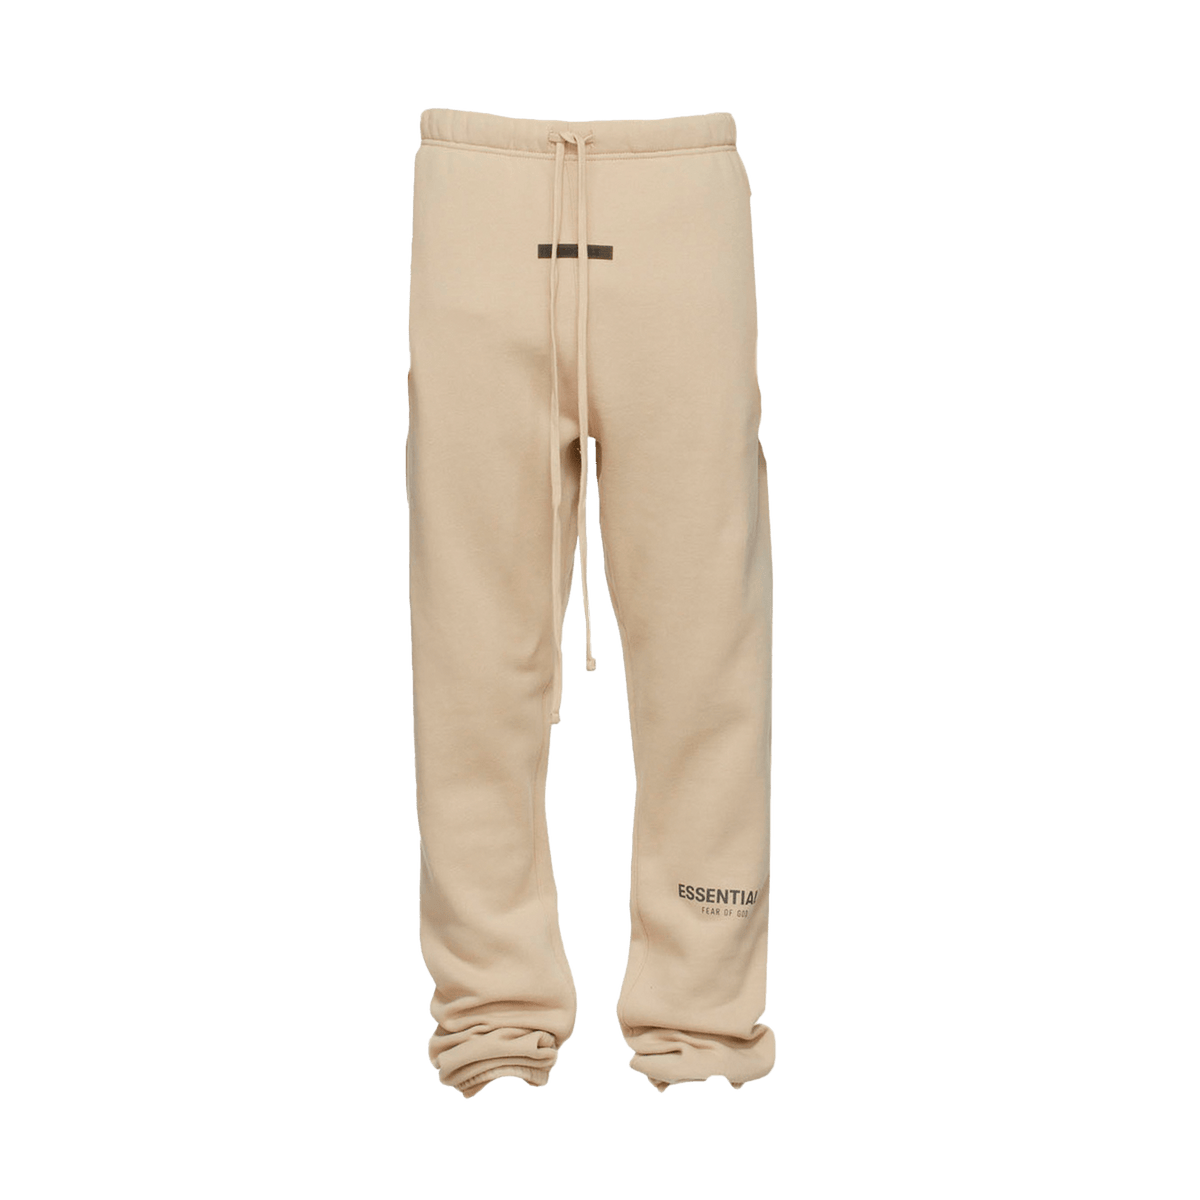 Contrast High Waist Cotton Denim Shorts Essentials x SSENSE Sweatpants 'Linen' - UrlfreezeShops